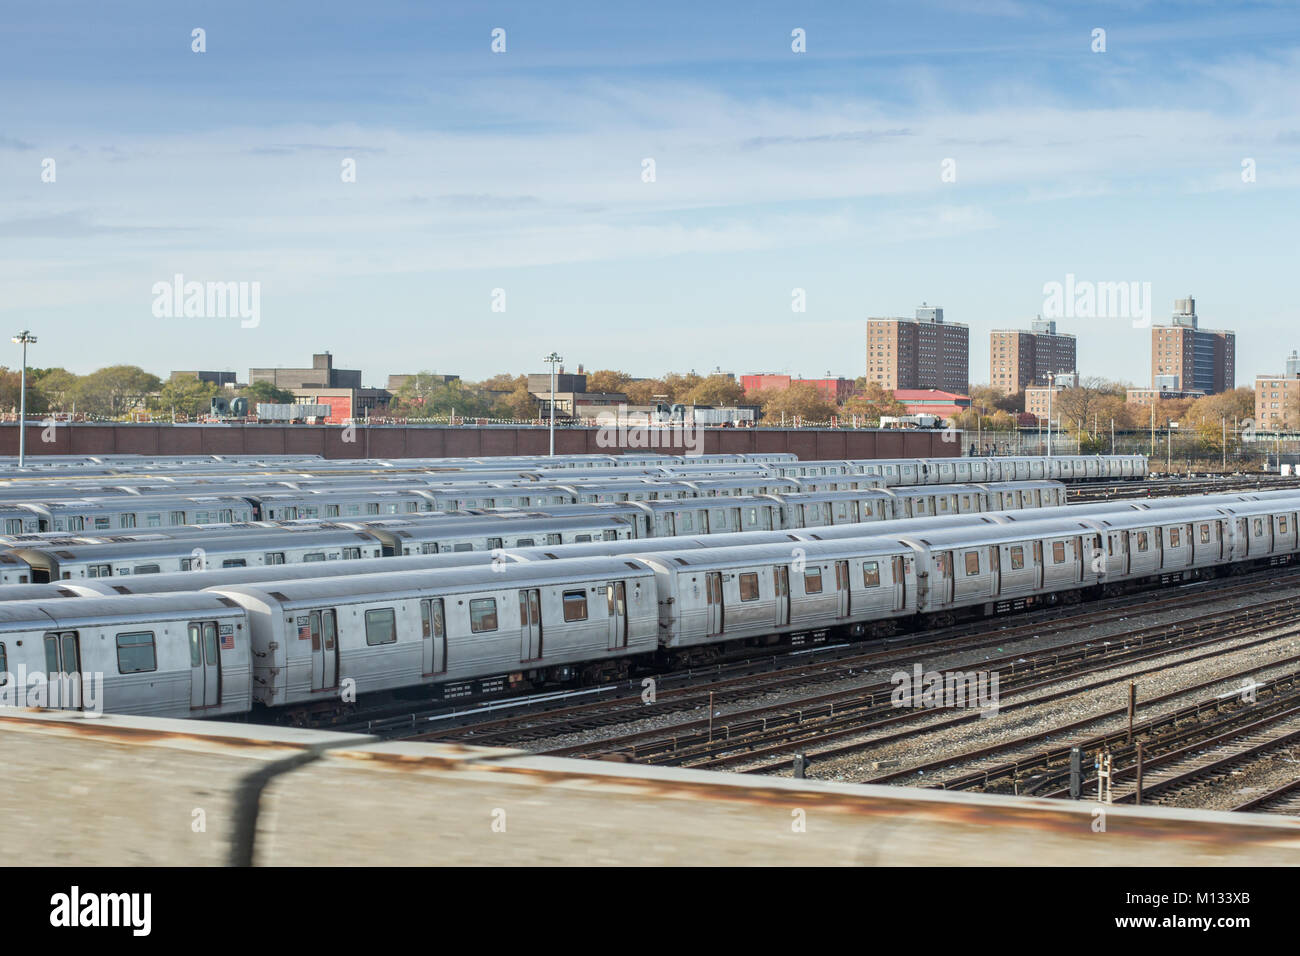 Storage siding for not used trains, train station, New York, NY, United States of America Stock Photo